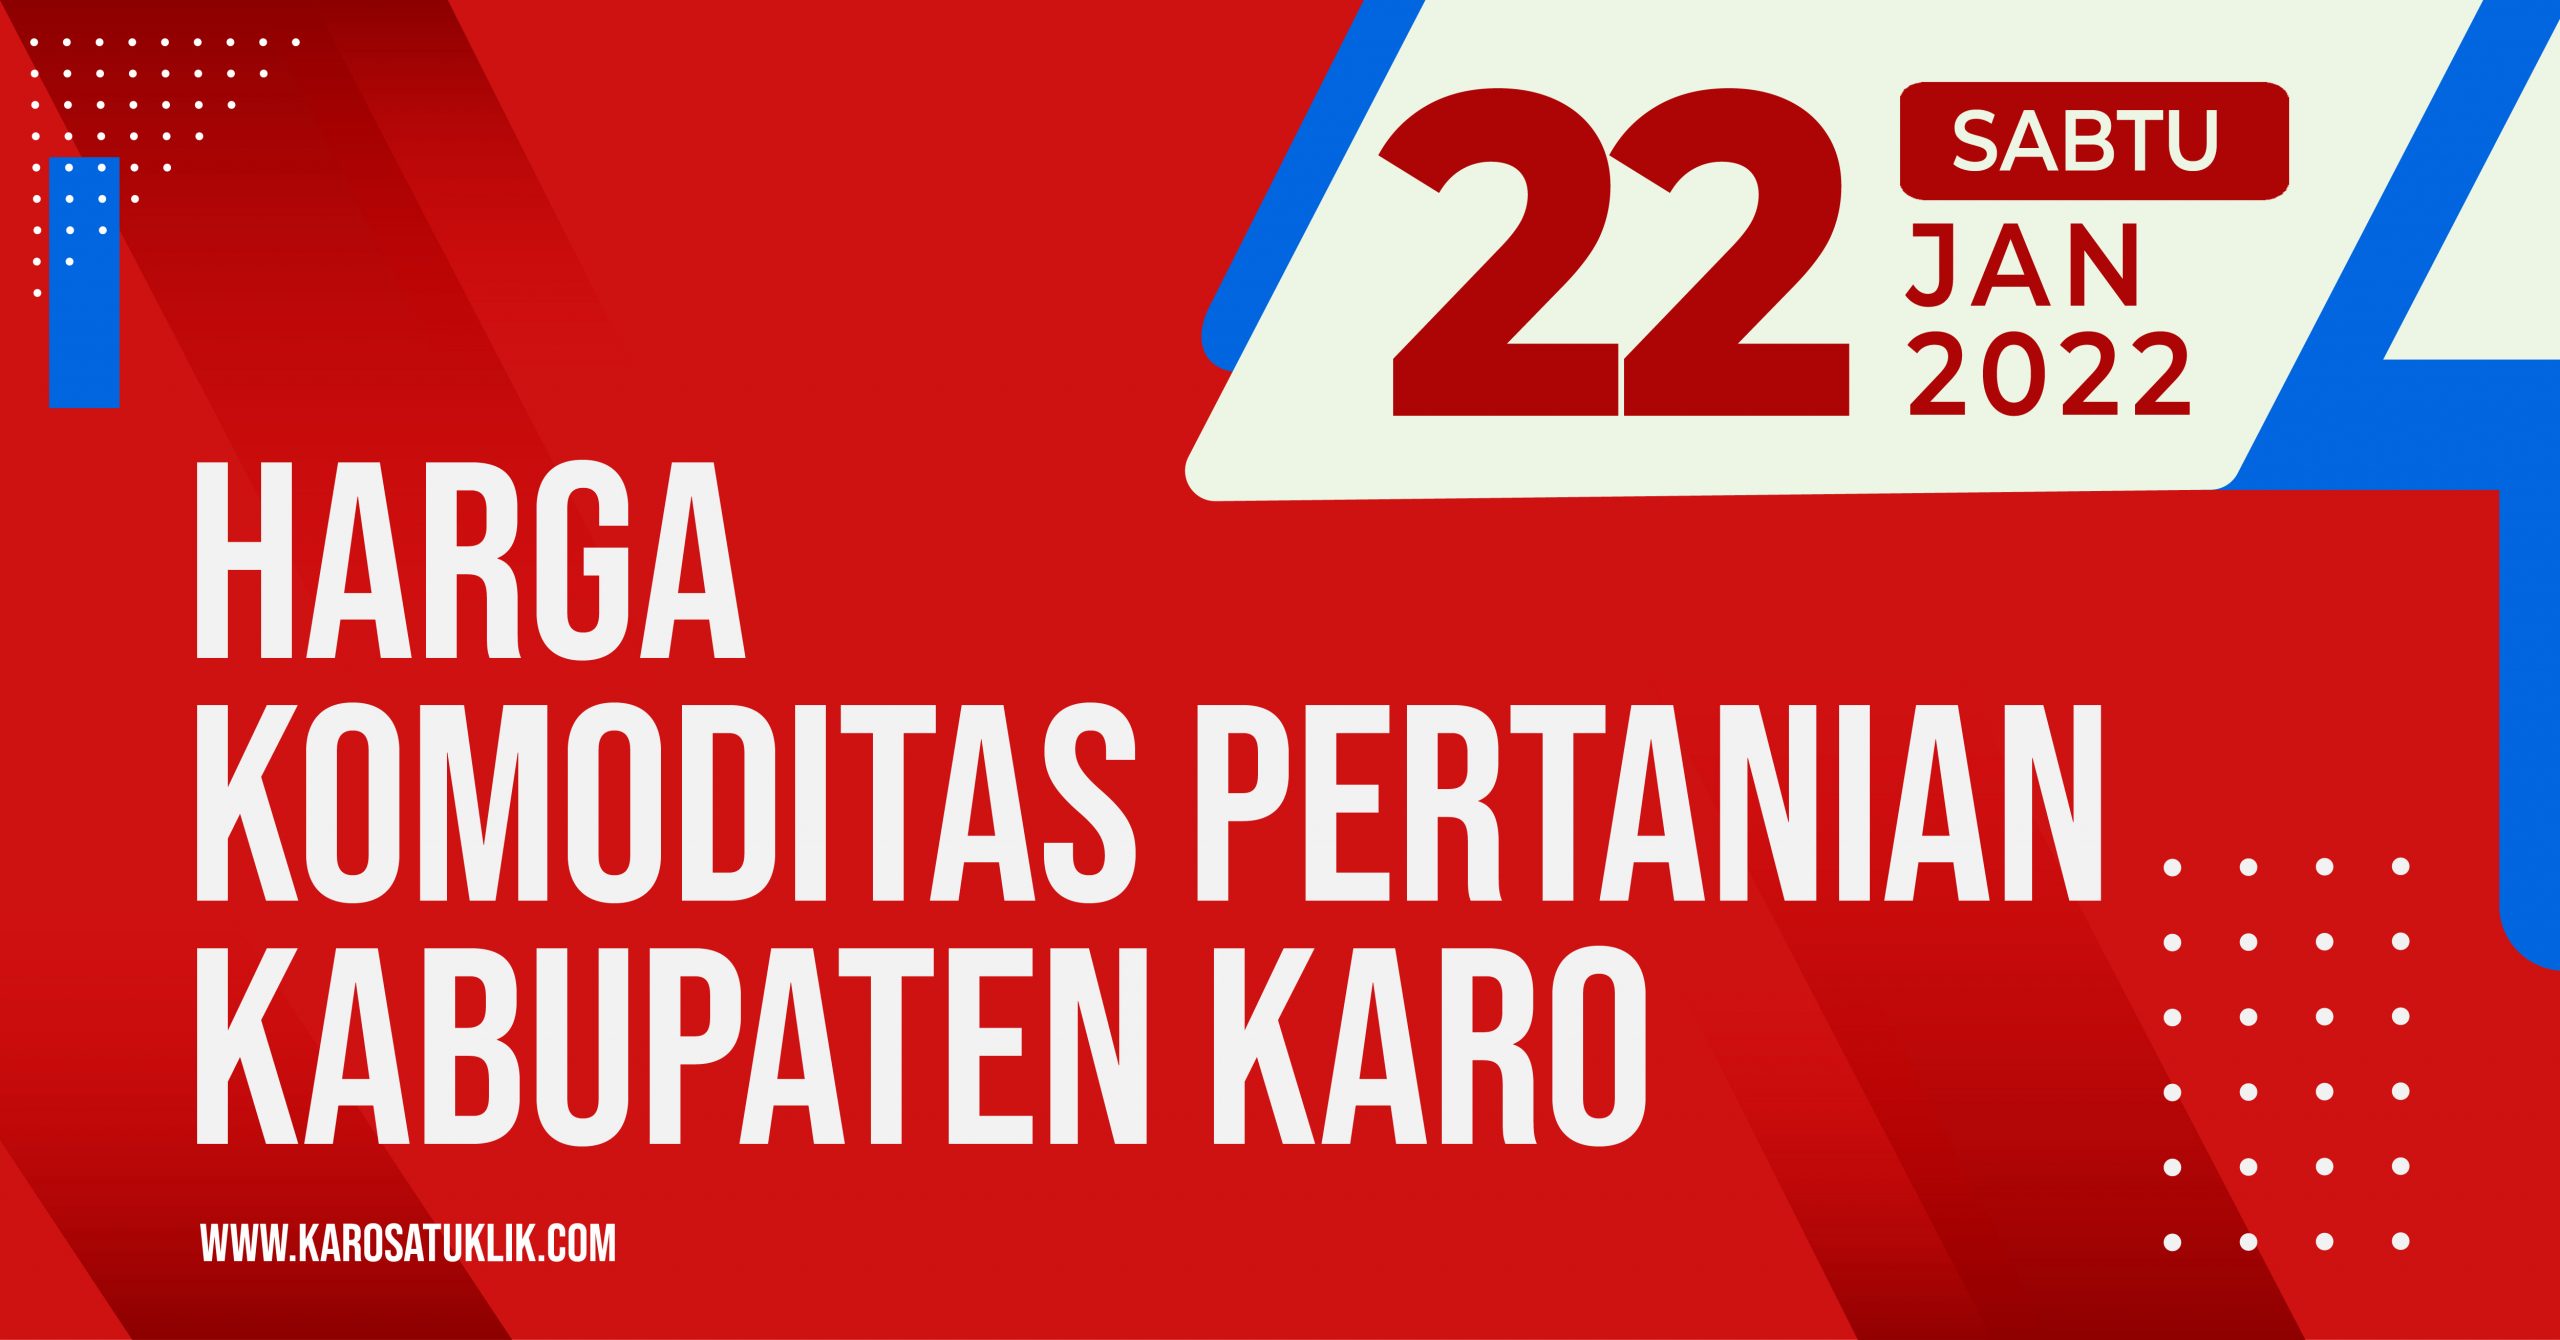 Daftar Harga Komoditas Pertanian Kabupaten Karo, 22 Januari 2022